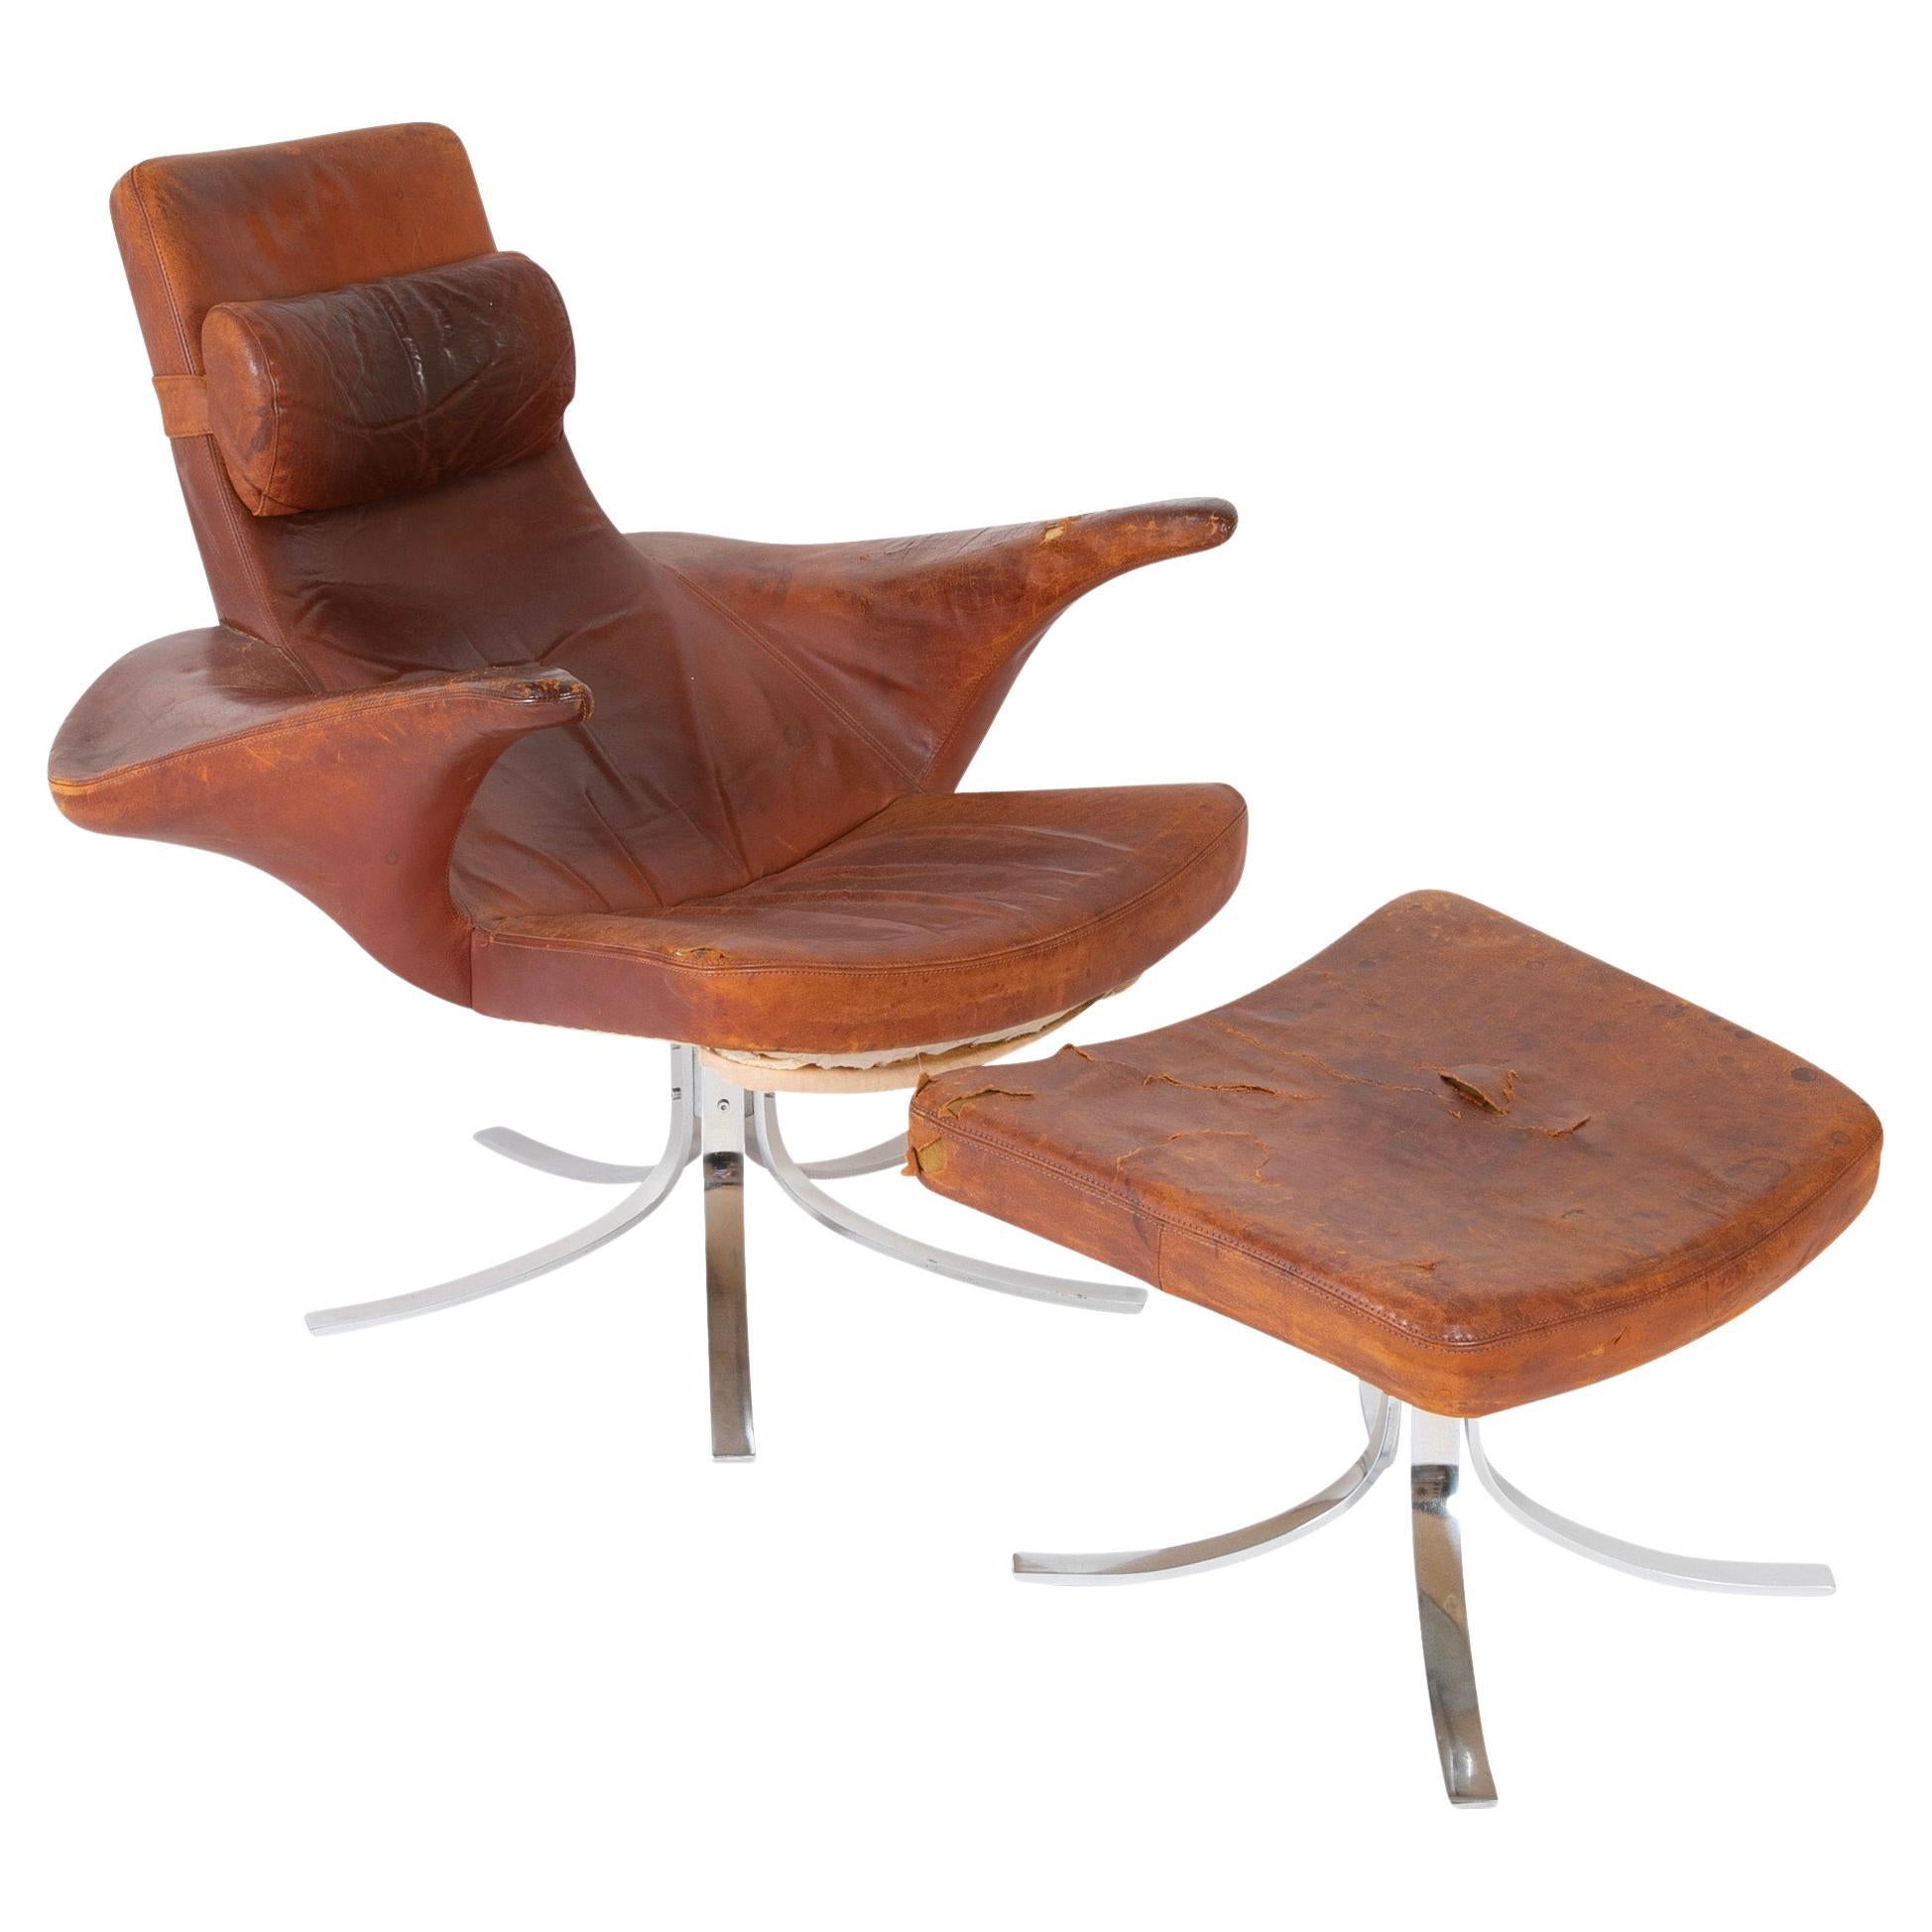 "Seagull Chair" by Gosta Berg & Stenerik Eriksson For Sale